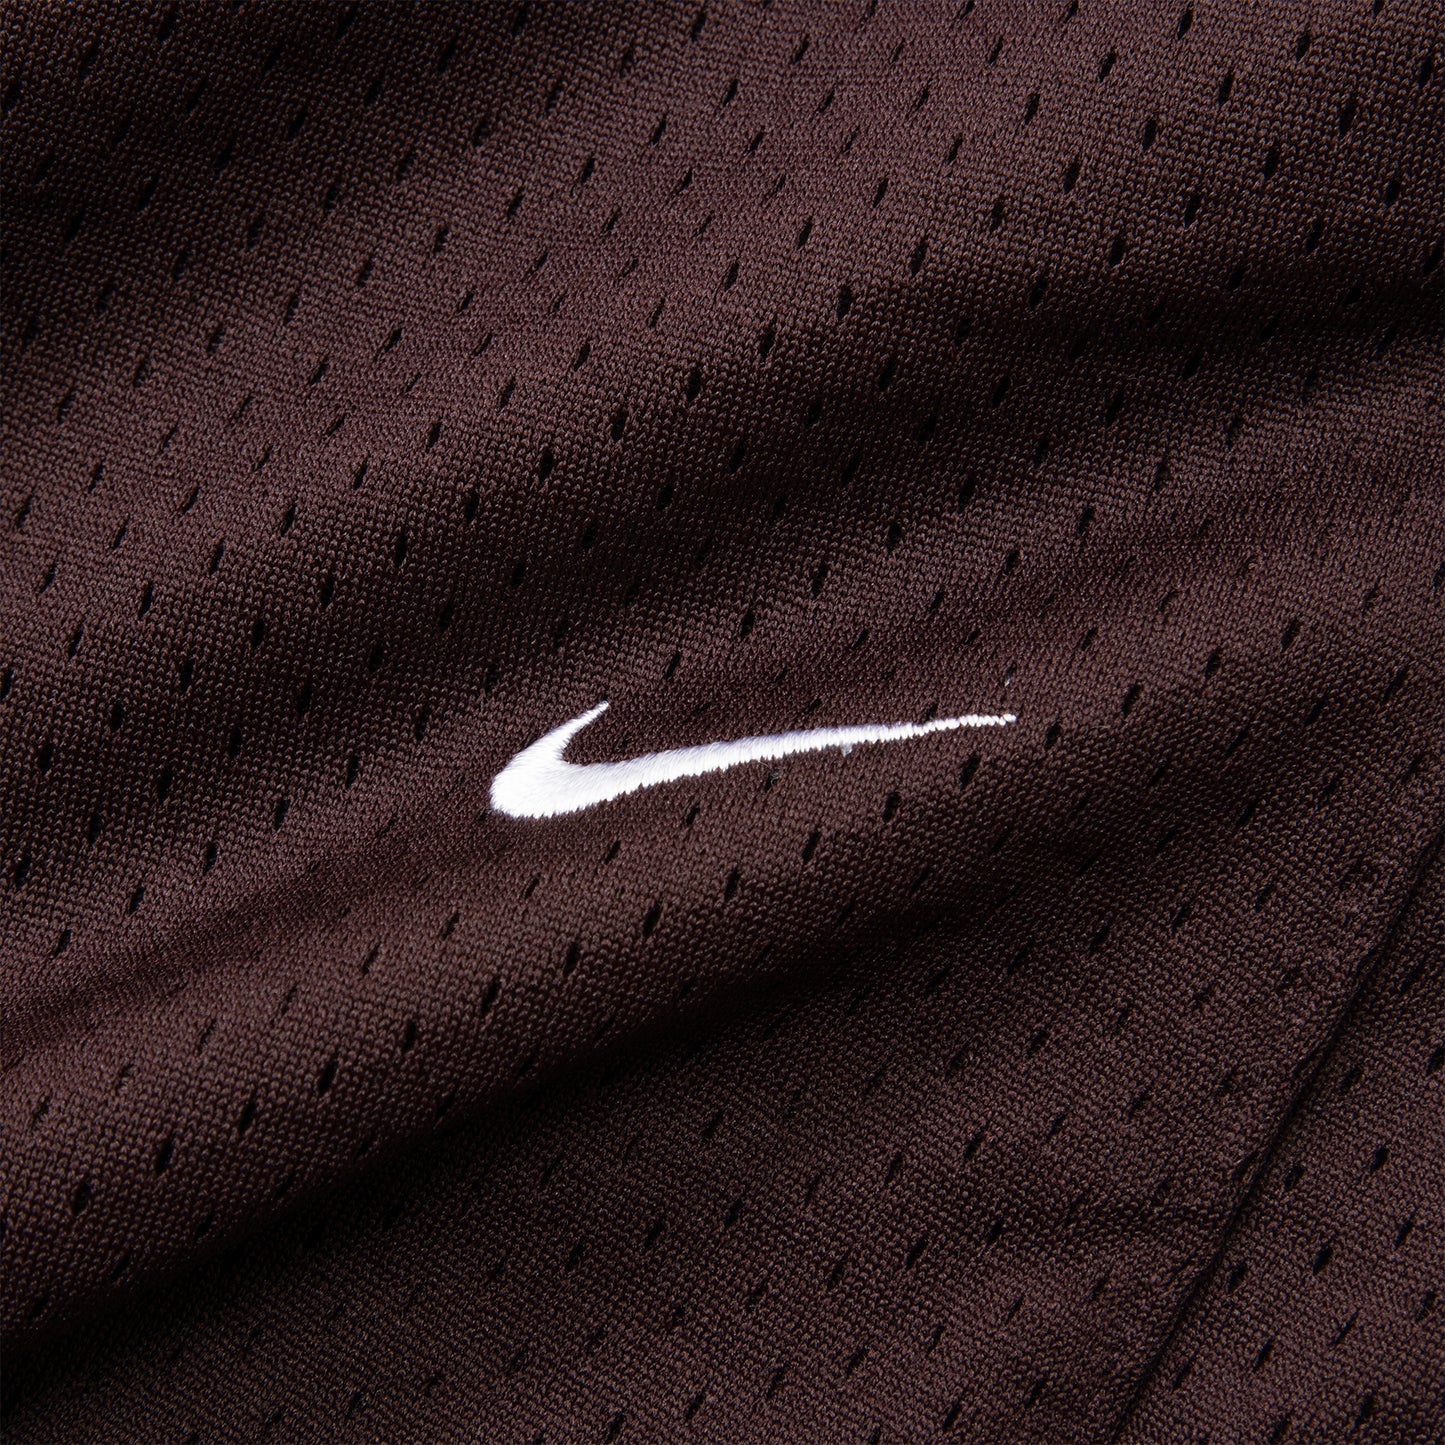 Nike Sportswear Mesh Shorts (Brown/White)